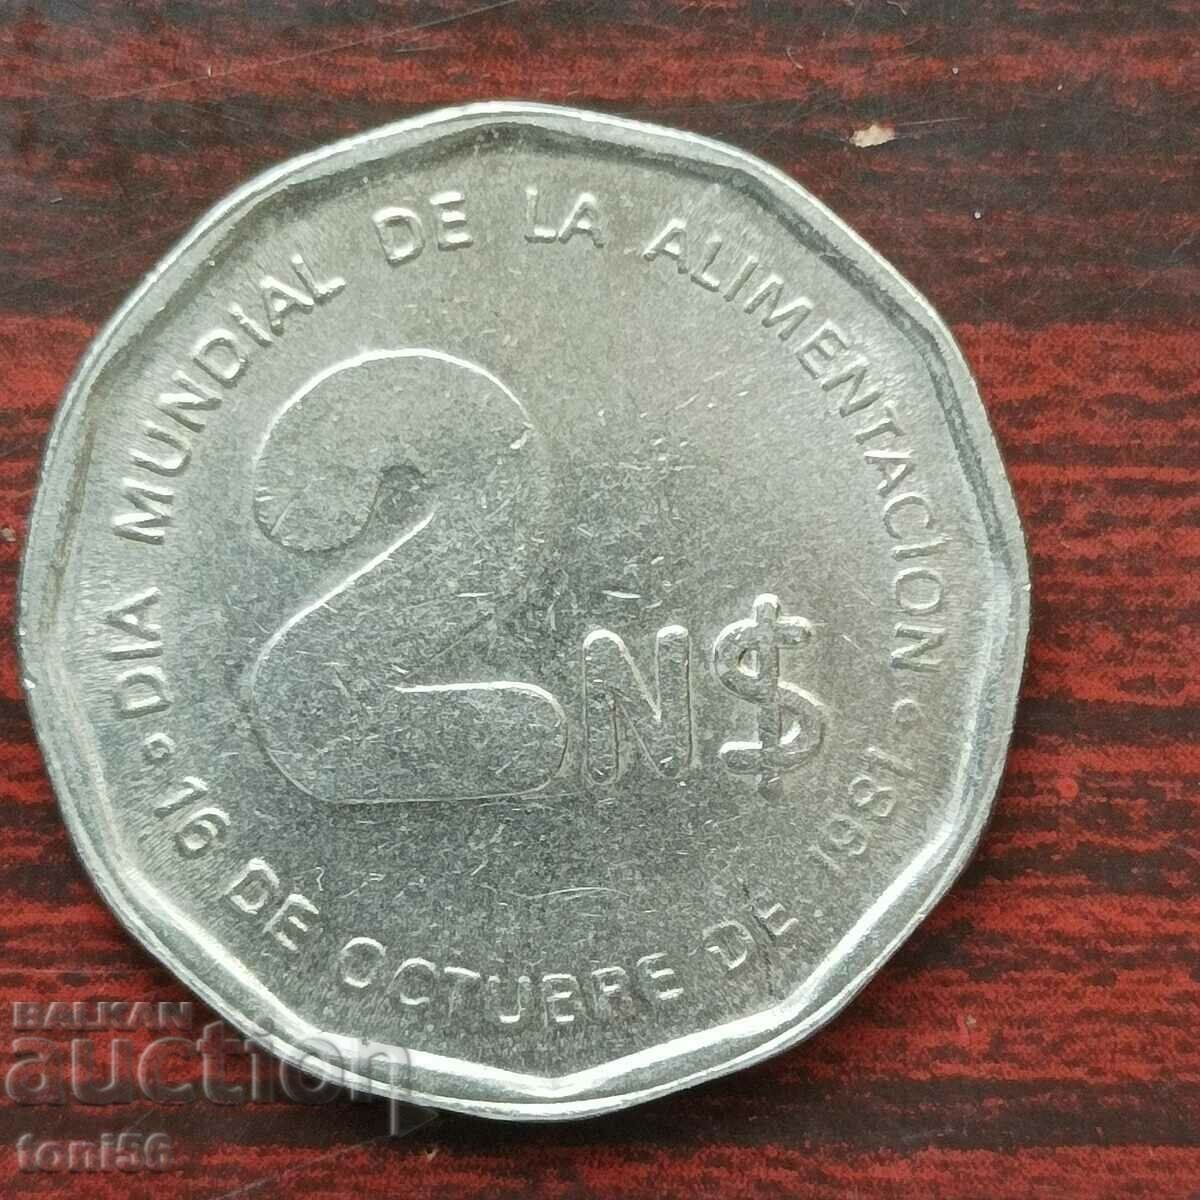 Uruguay 2 new pesos 1981 FAO UNC